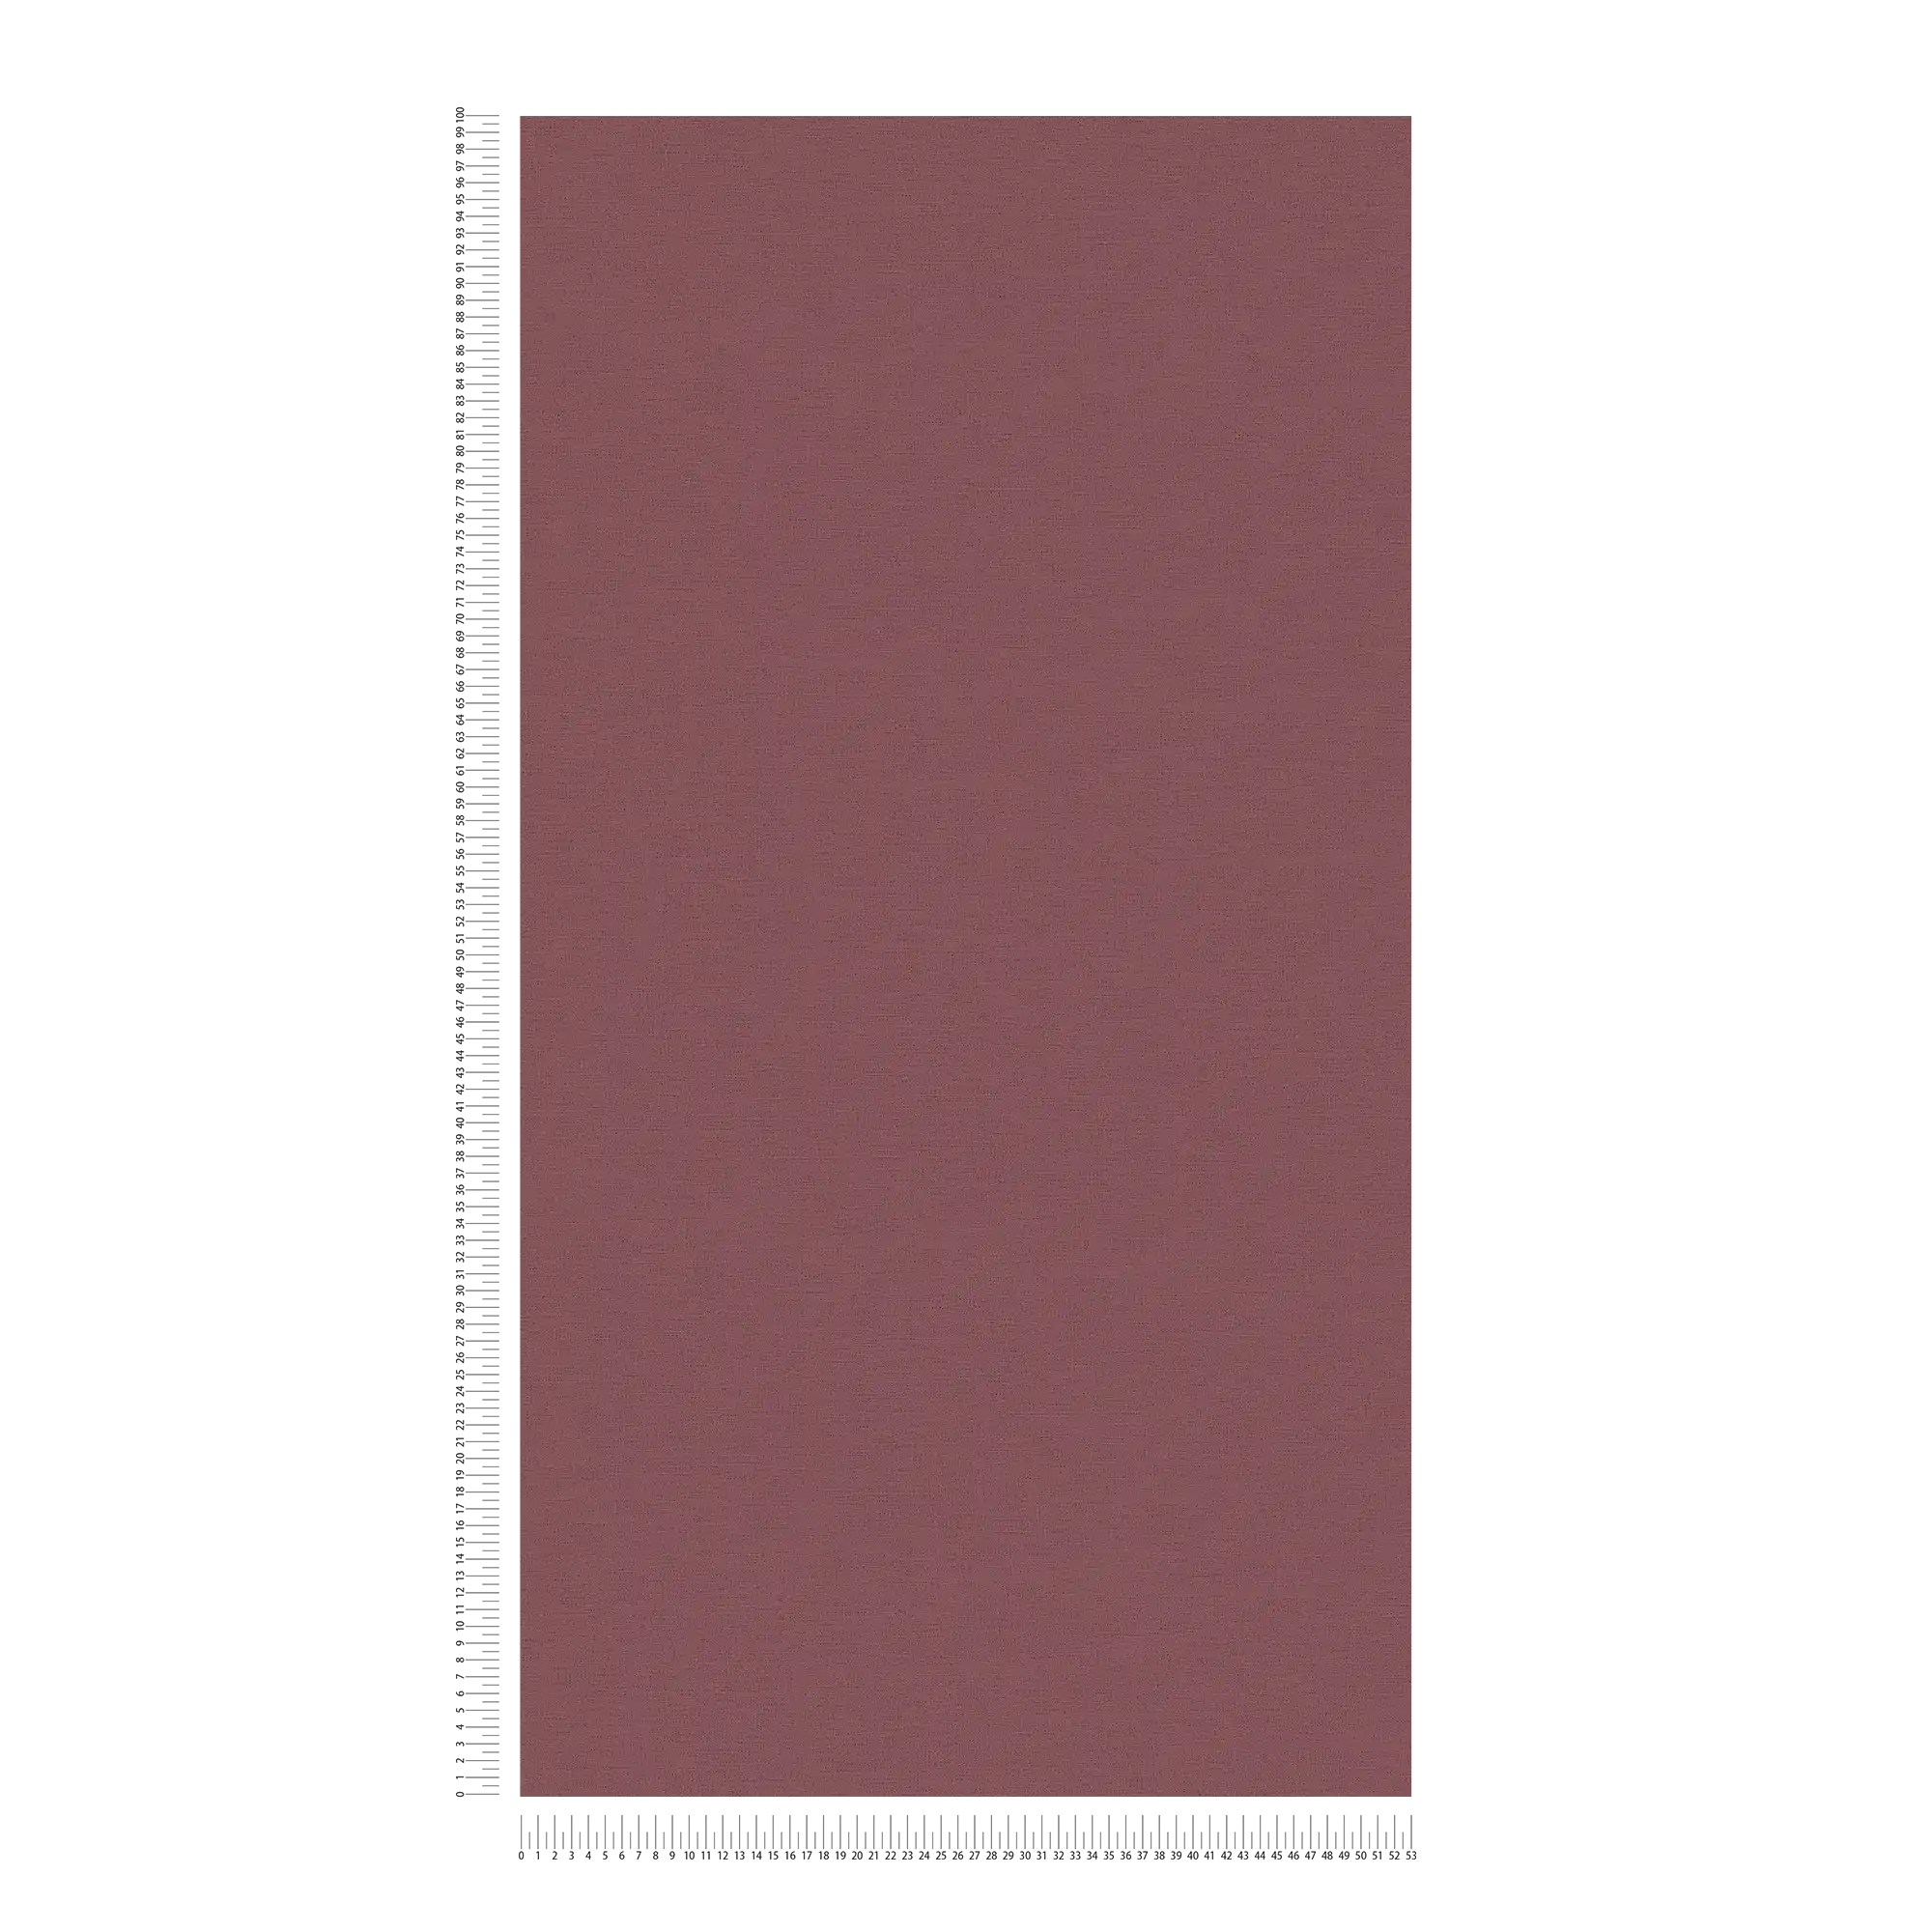             Einfarbige Tapete Bordeaux Rot mit Textiloptik
        